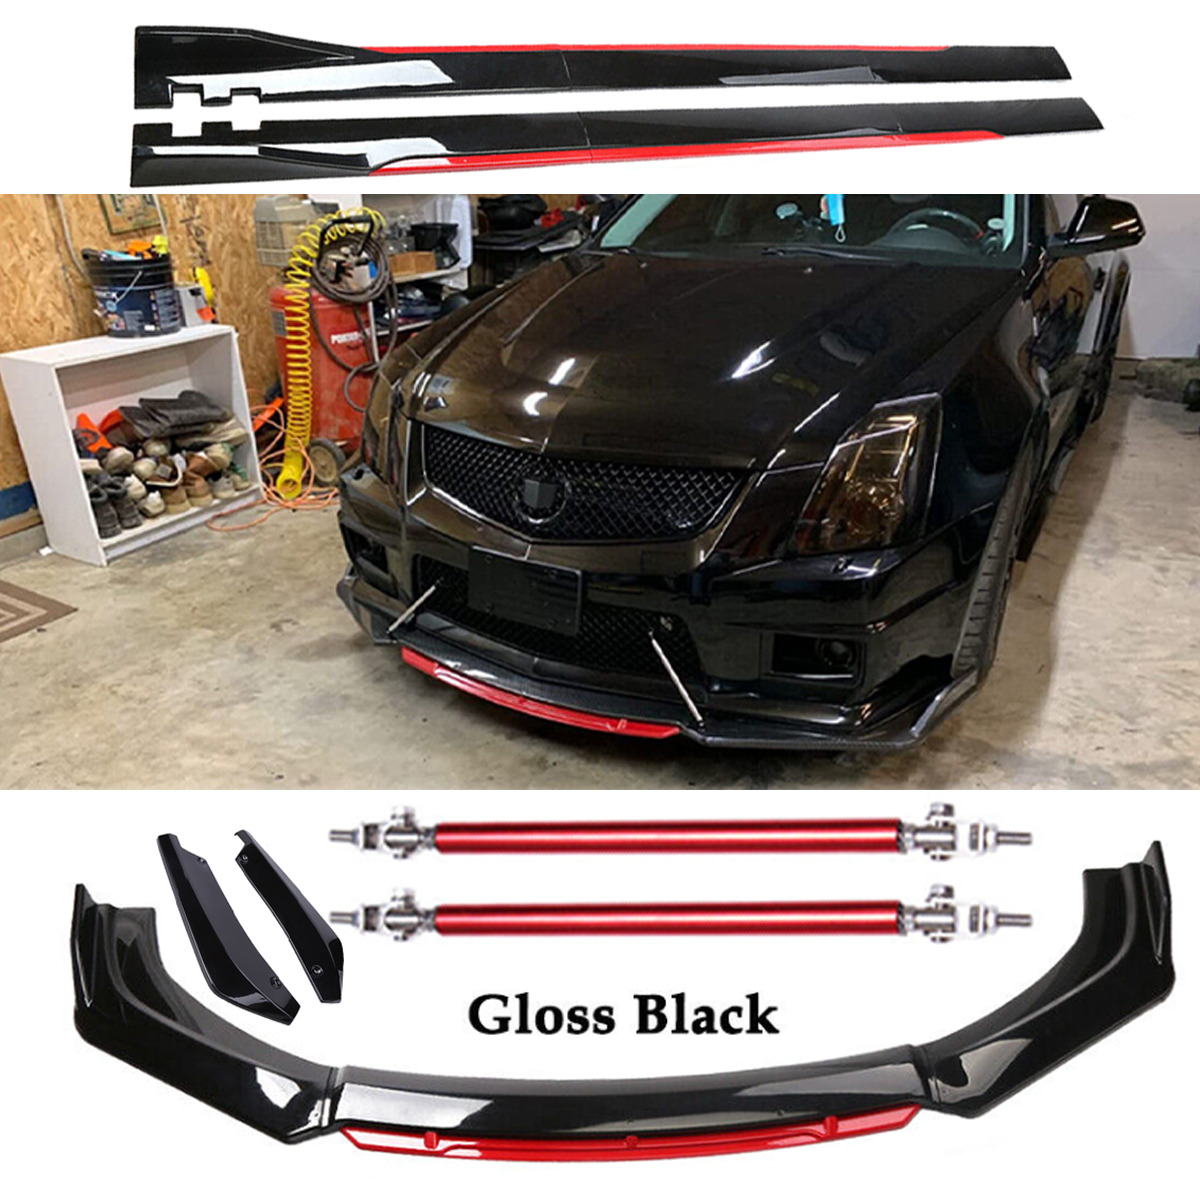 For Cadillac CTS CTS-V Glossy Black Strut Rod Front Bumper Lip Spoiler Splitter